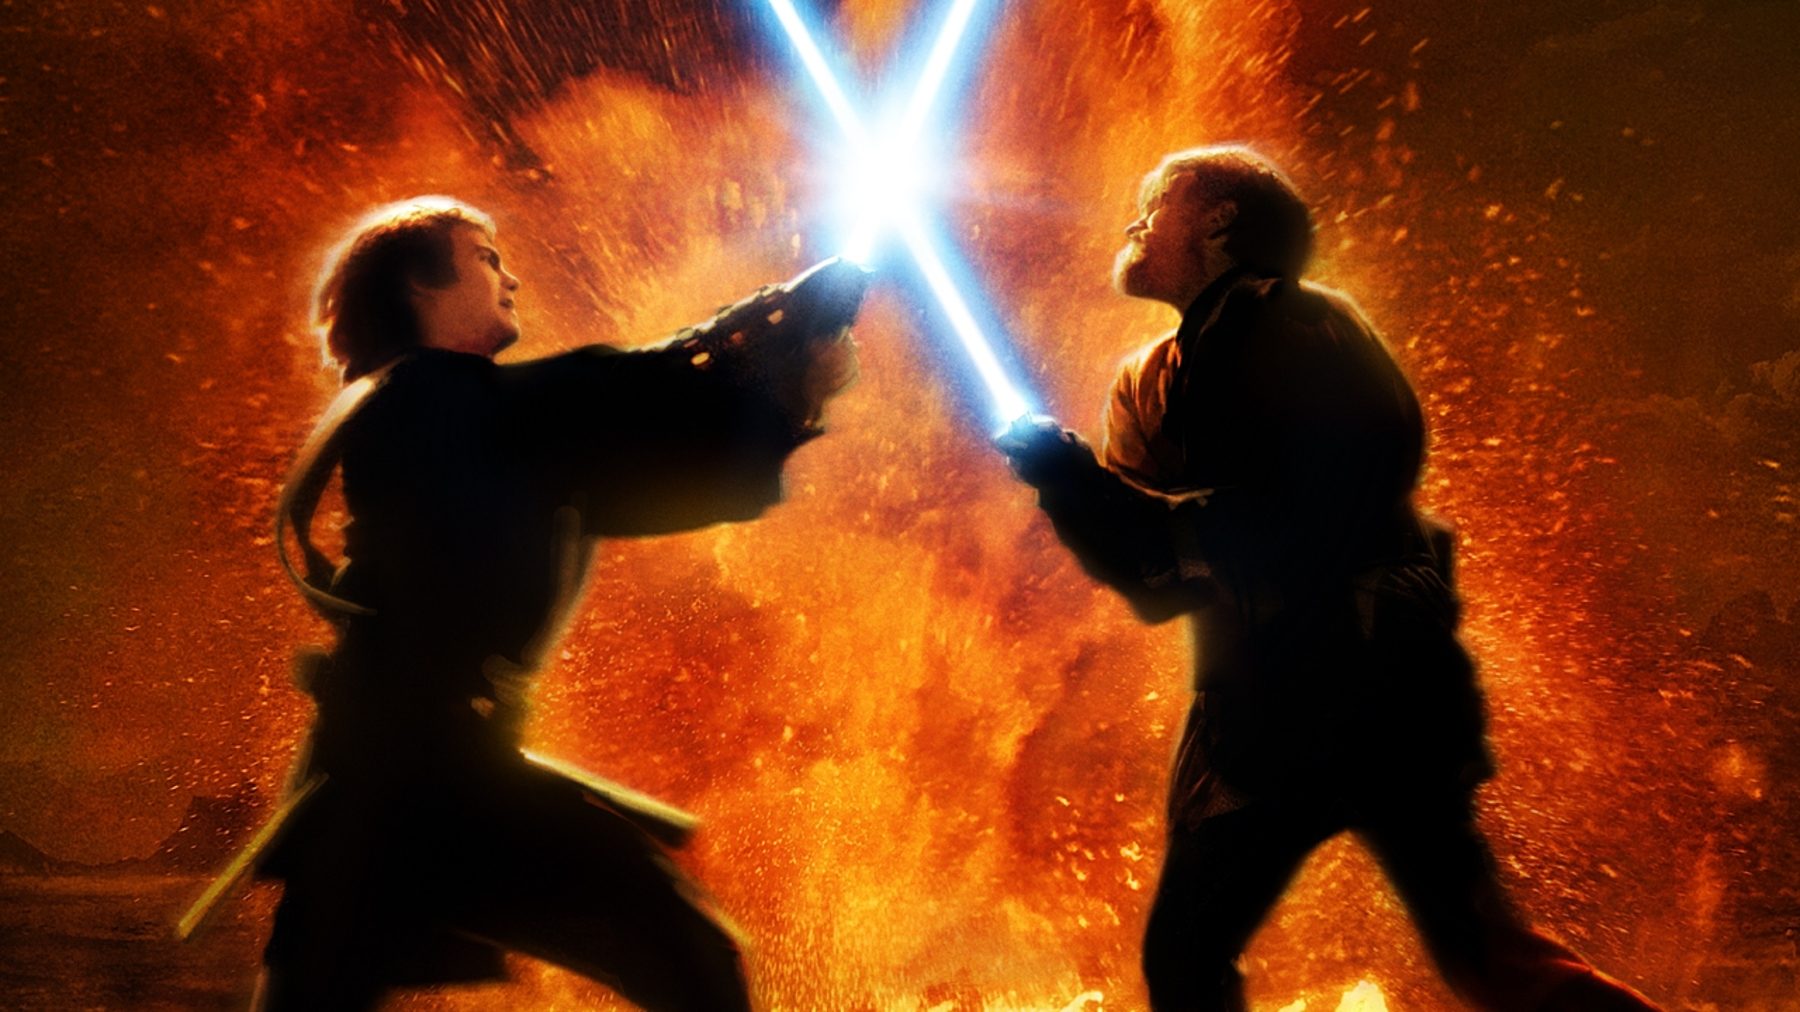 Obi-Wan Kenobi Series Poster Reveals Disney+ Premiere Date